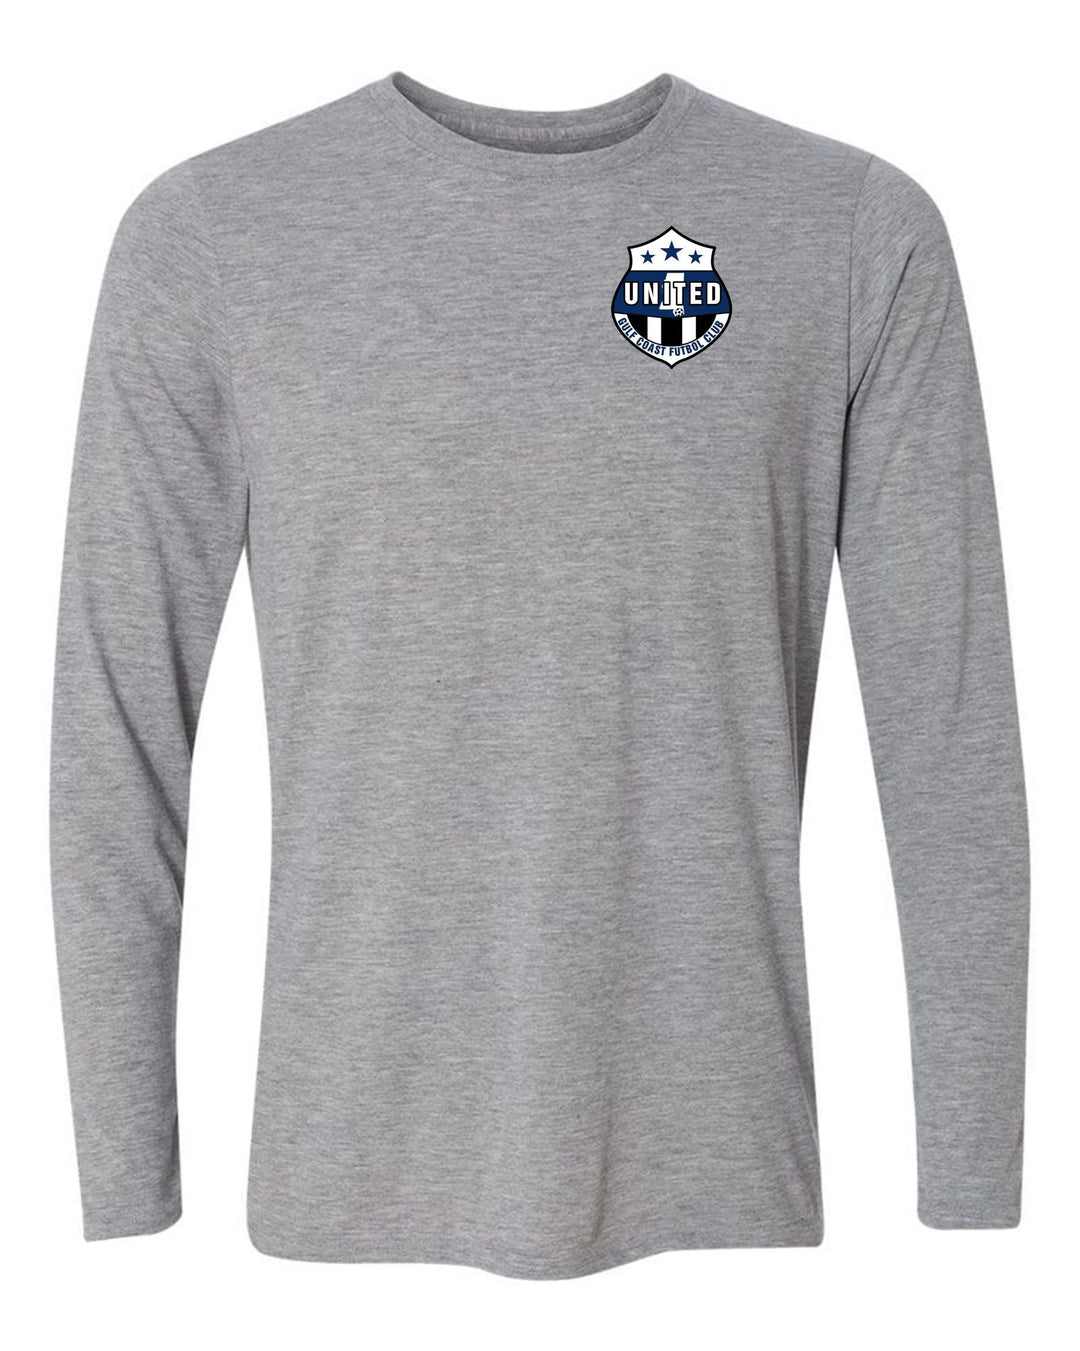 Gulf Coast United LS T-shirt - Royal or Sport Grey Gulf Coast United Spiritwear SPORT GREY MENS EXTRA LARGE - Third Coast Soccer